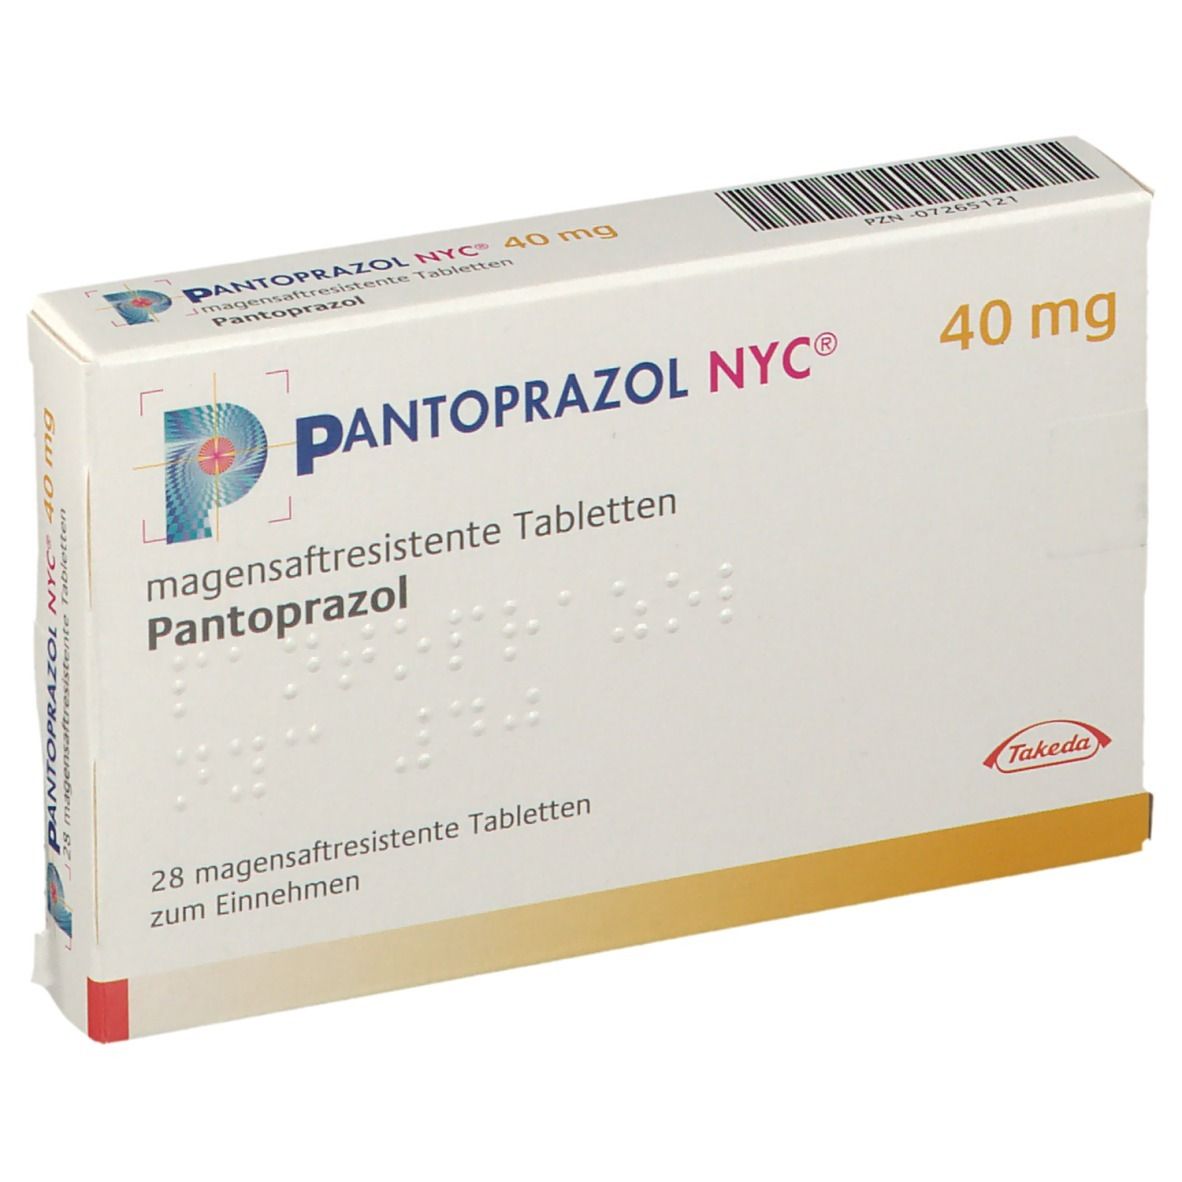 Pantoprazol NYC® 40 mg